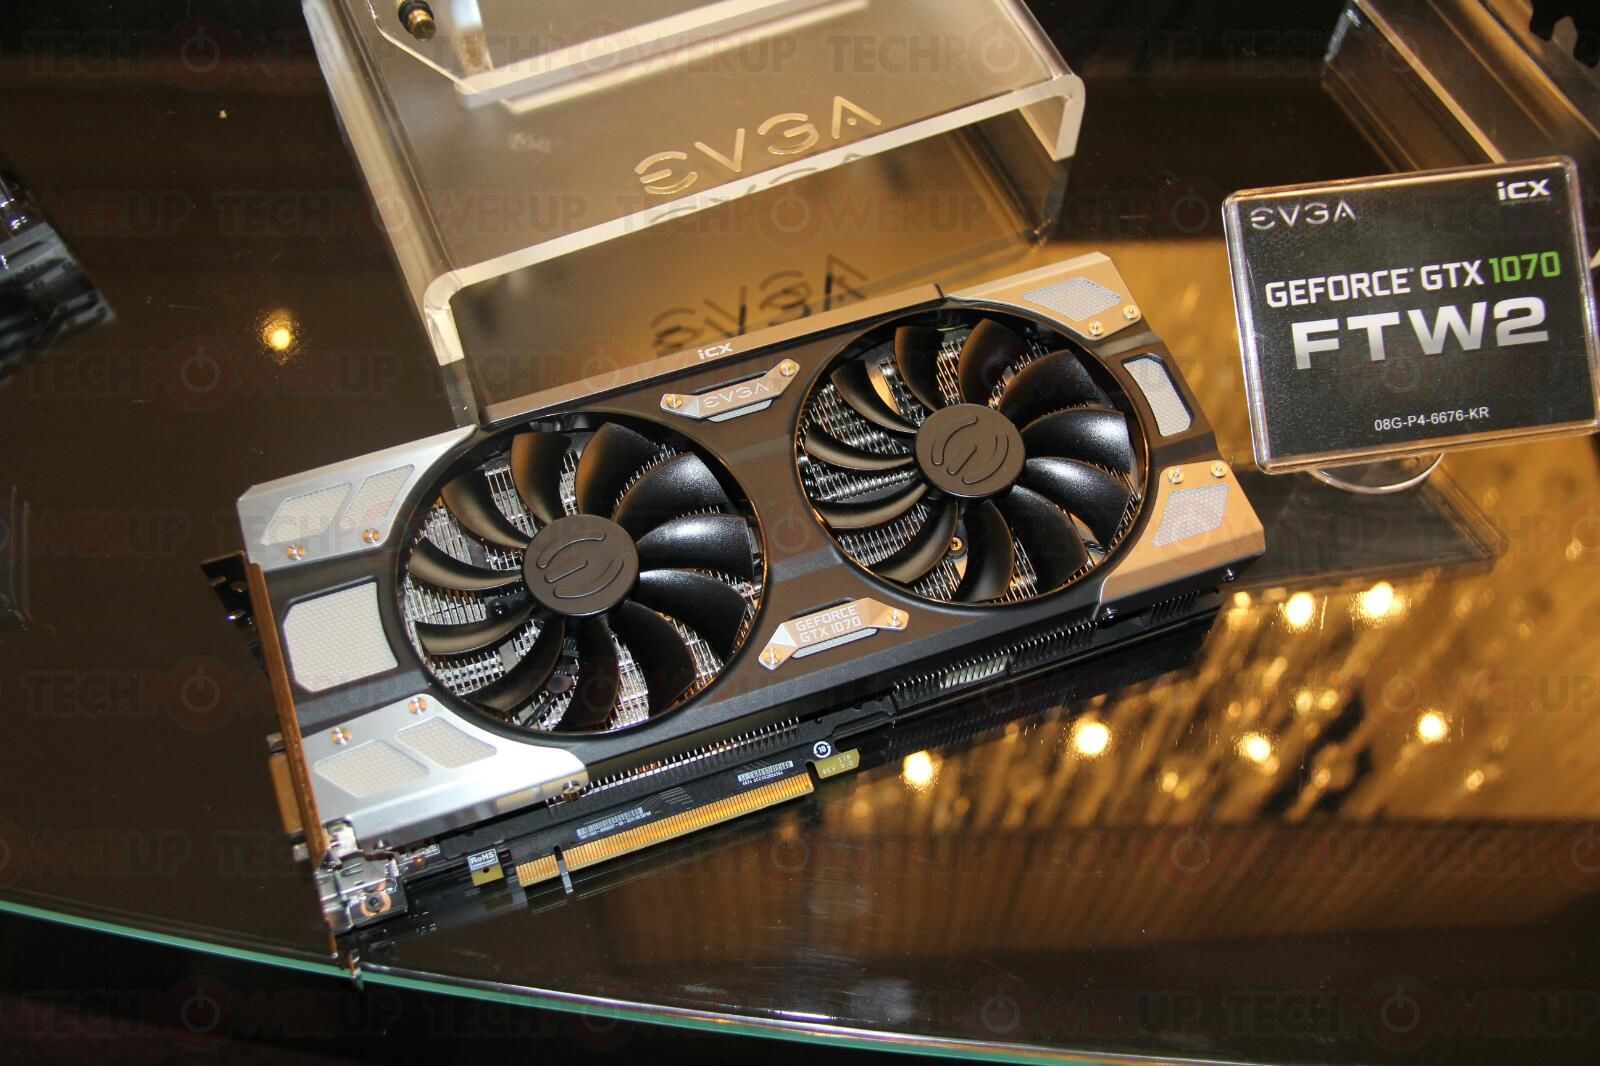 EVGA - Product Specs - EVGA GeForce GTX 1080 FTW GAMING, 08G-P4